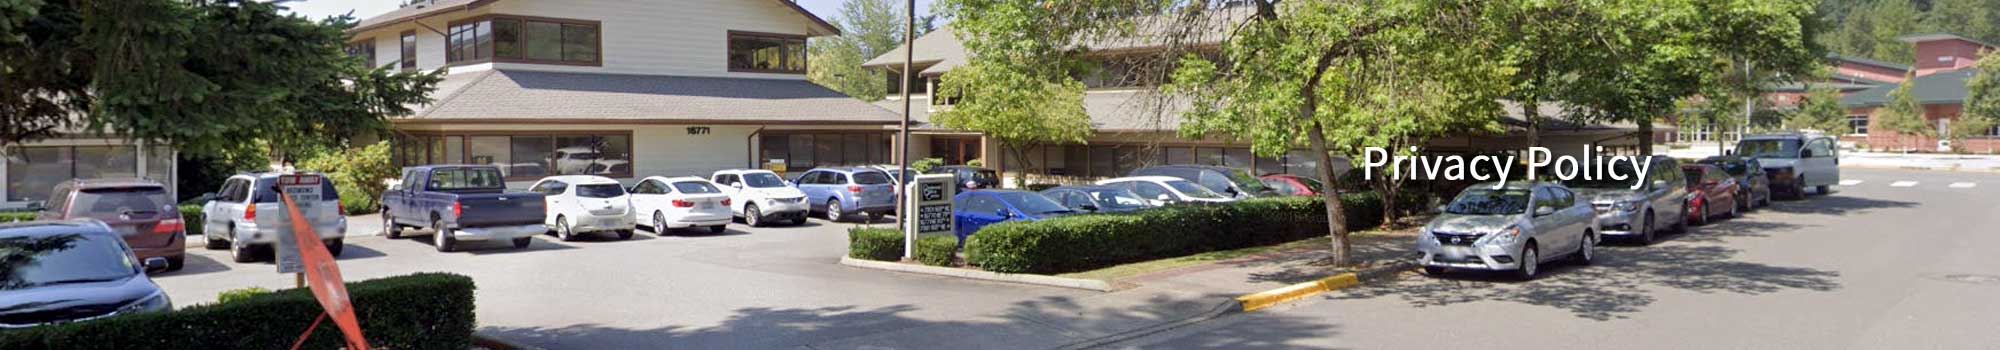 Car Auto Home Insurance Near Me| Lakeridge Insurance Redmond WA Property and Casualty Insurance Services